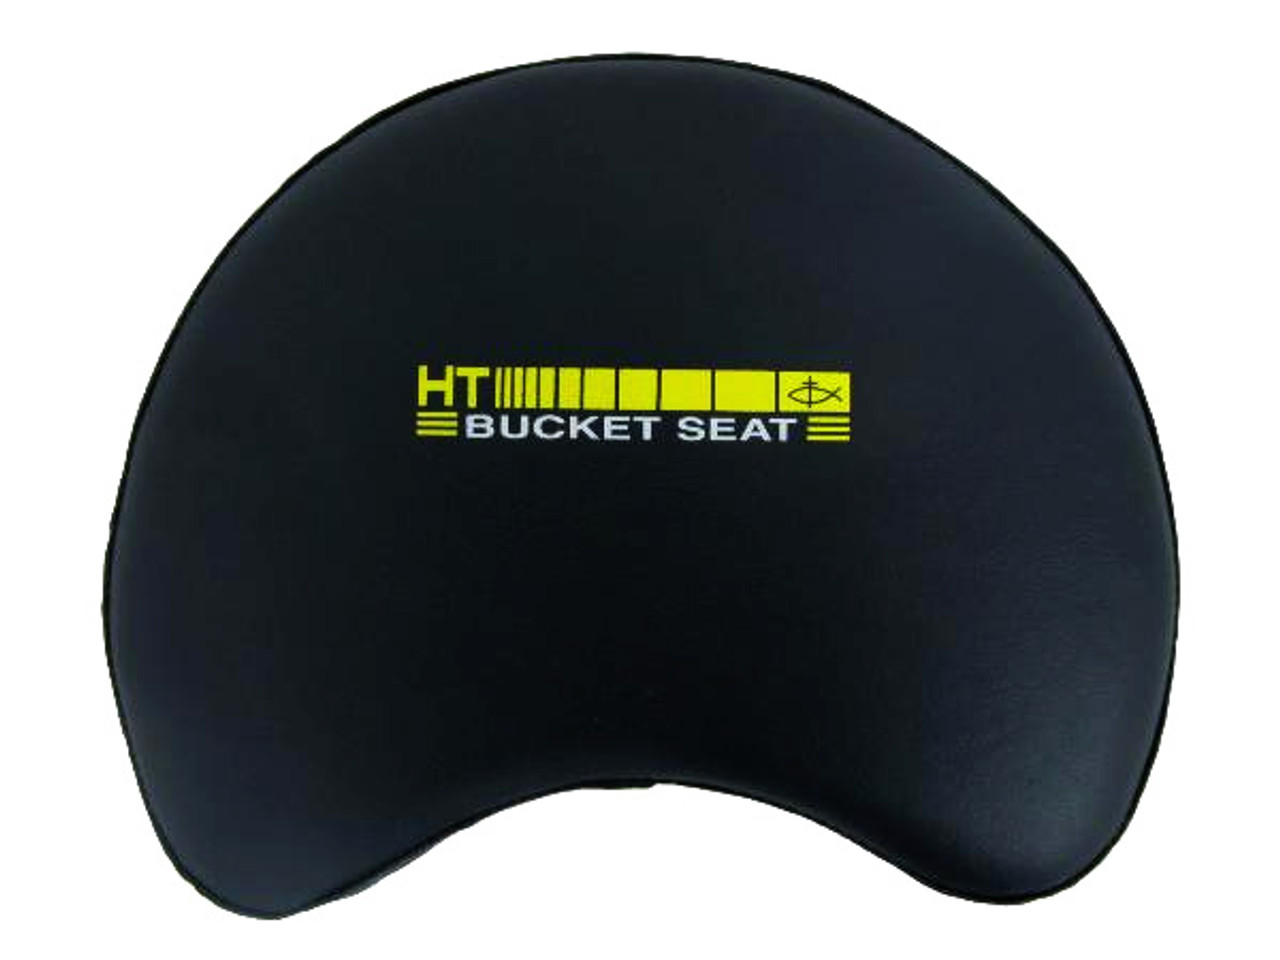 HT Bucket Seat by Hi-Tech Fishing